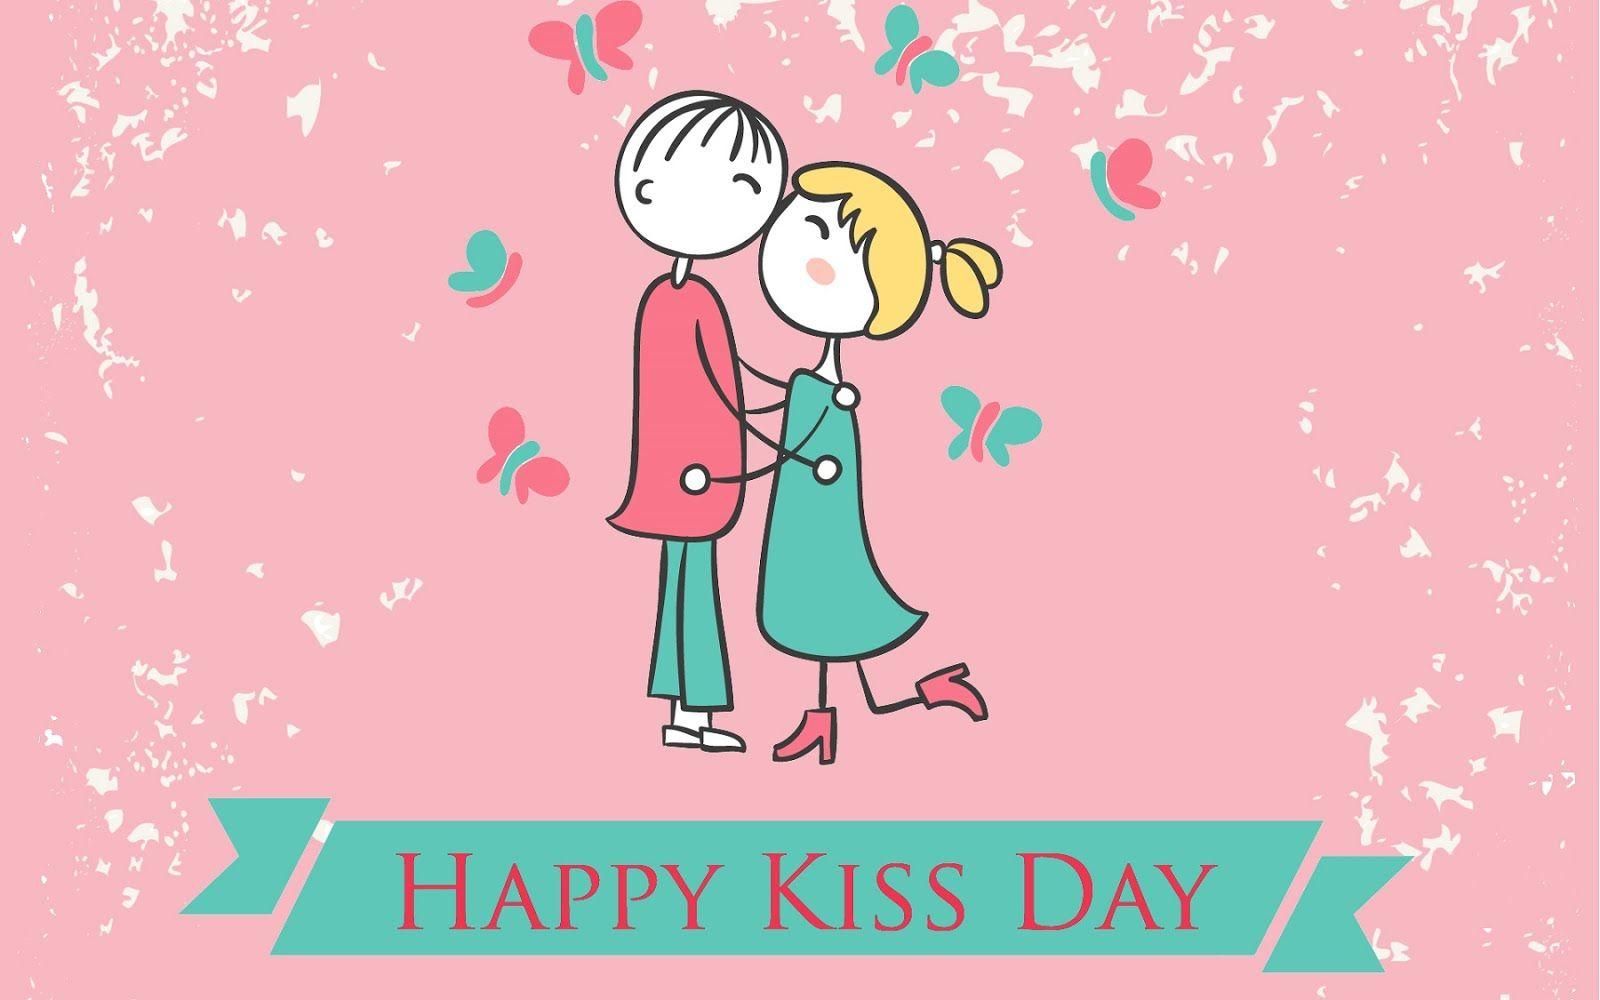 Happy Kiss Day Image, Pics, Wallpaper & Photo 2020 HD